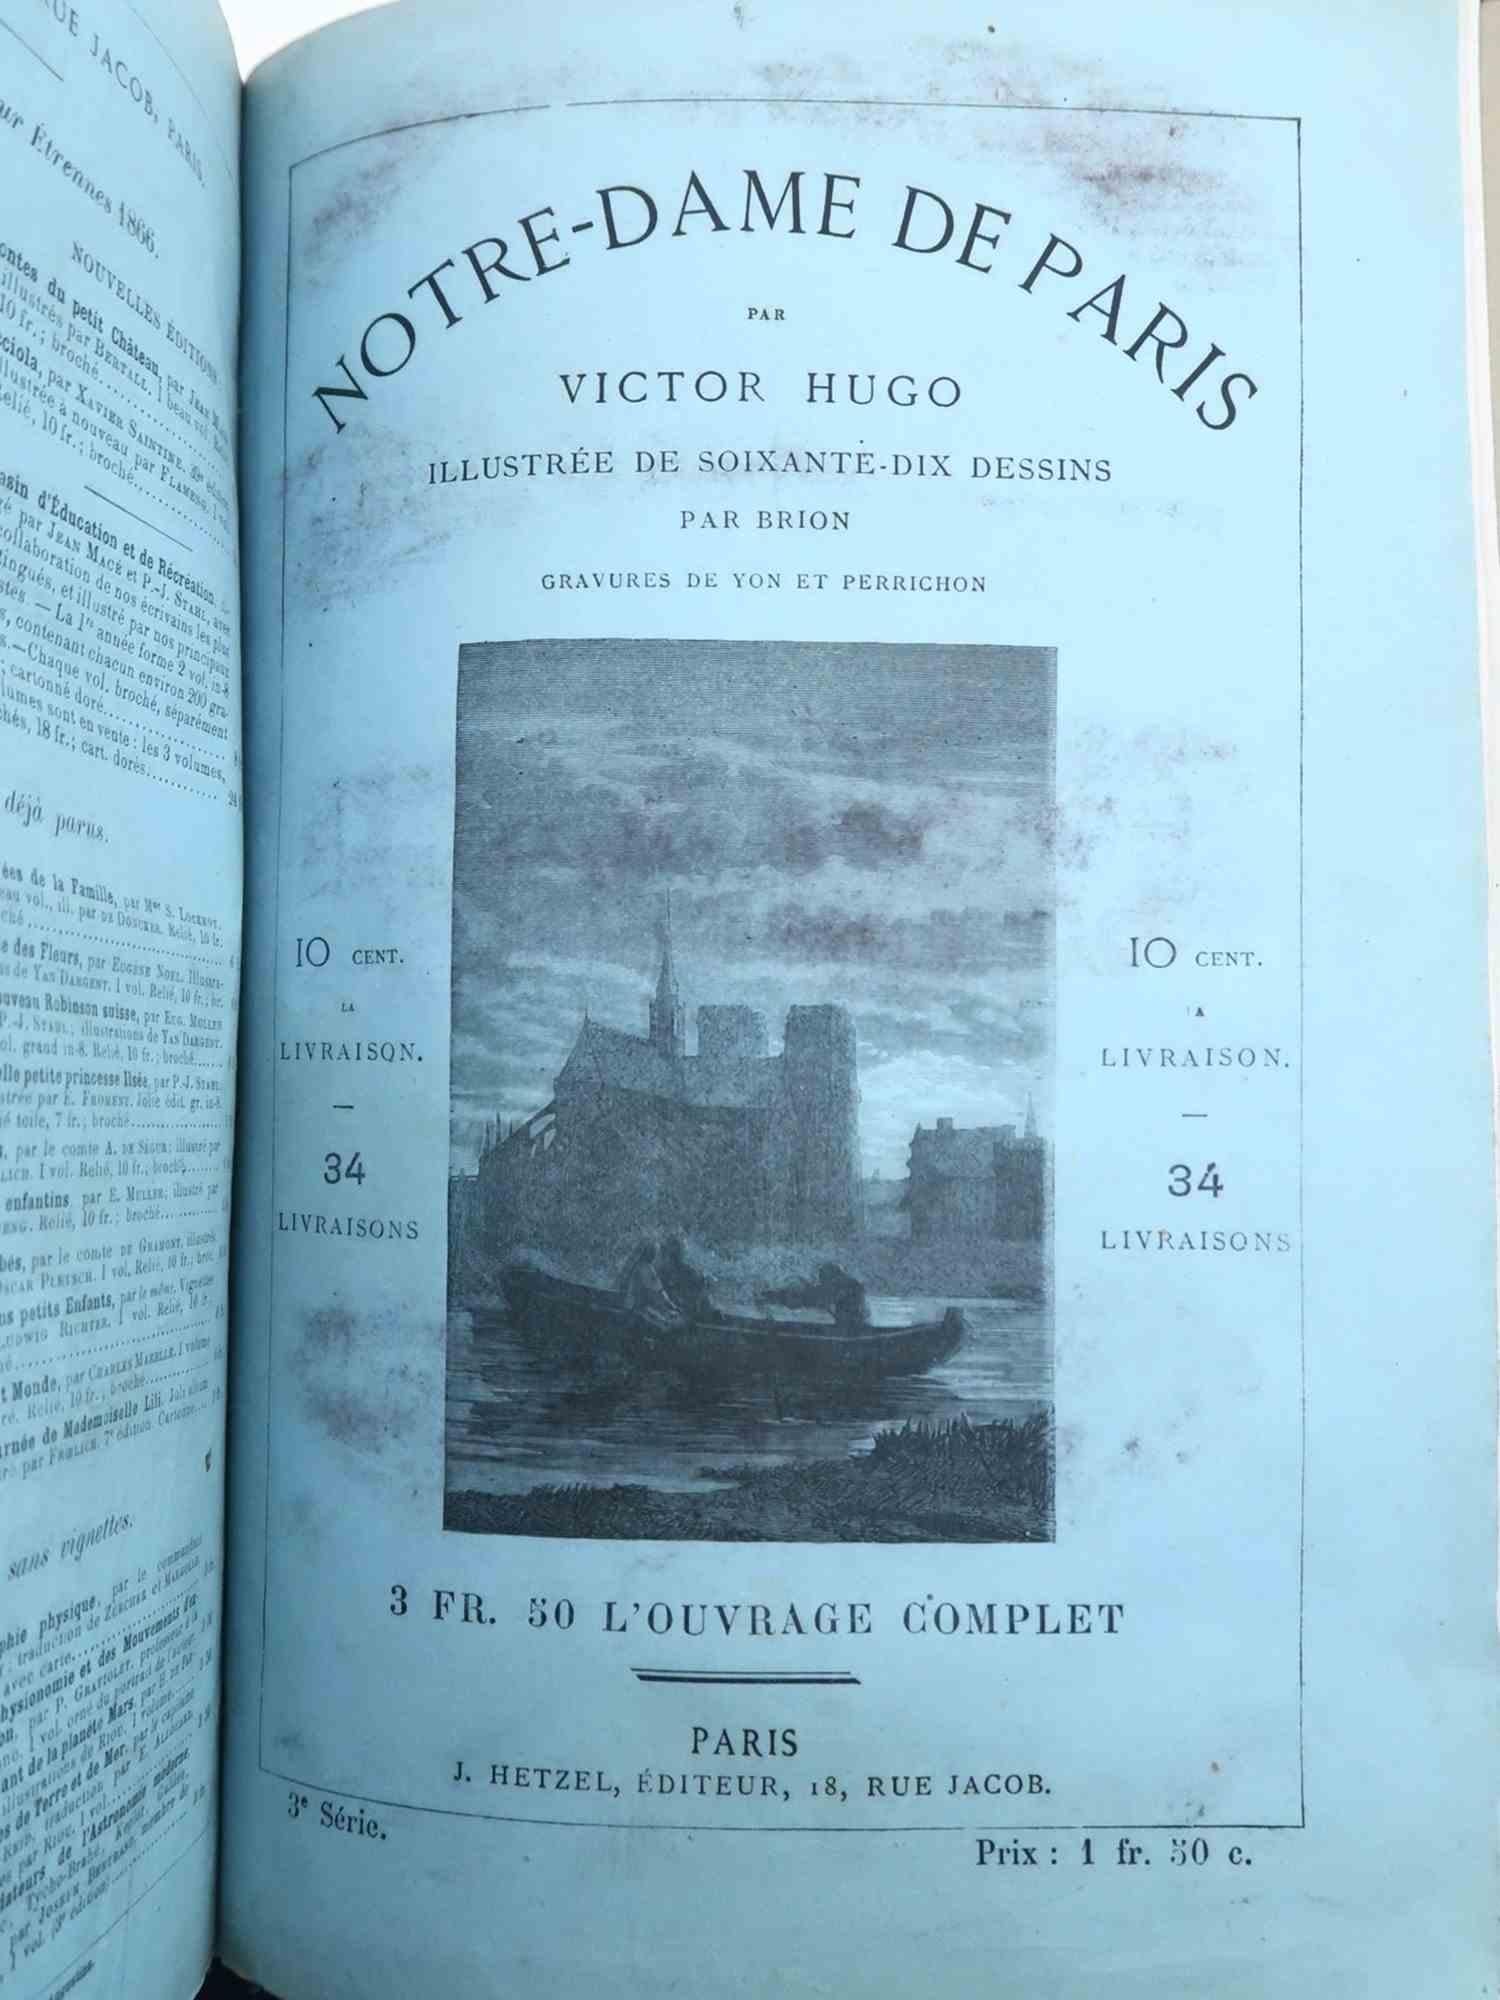 Notre Dame de Paris - Rare Book by Victor Hugo - 1865 For Sale 3